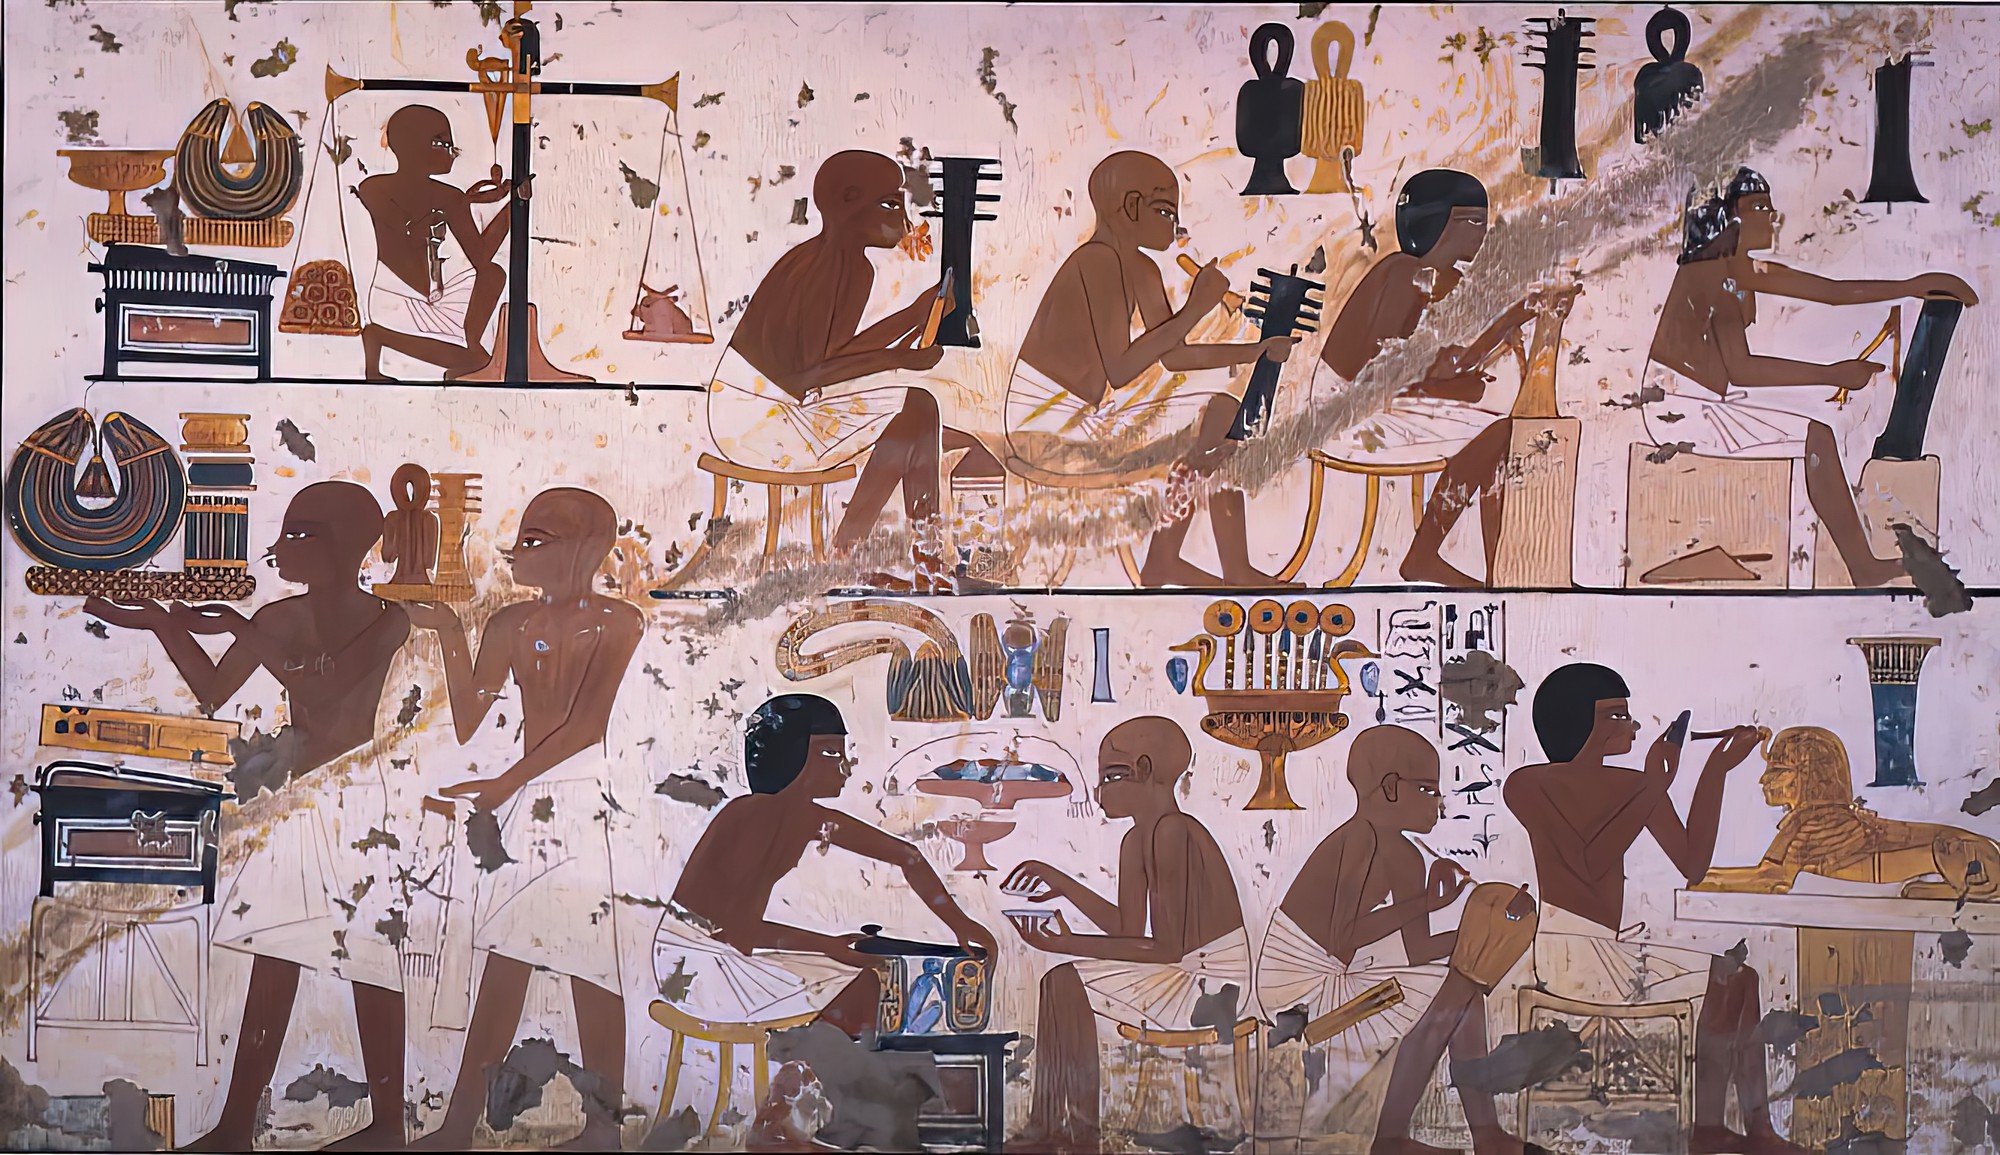 Древний египет племена